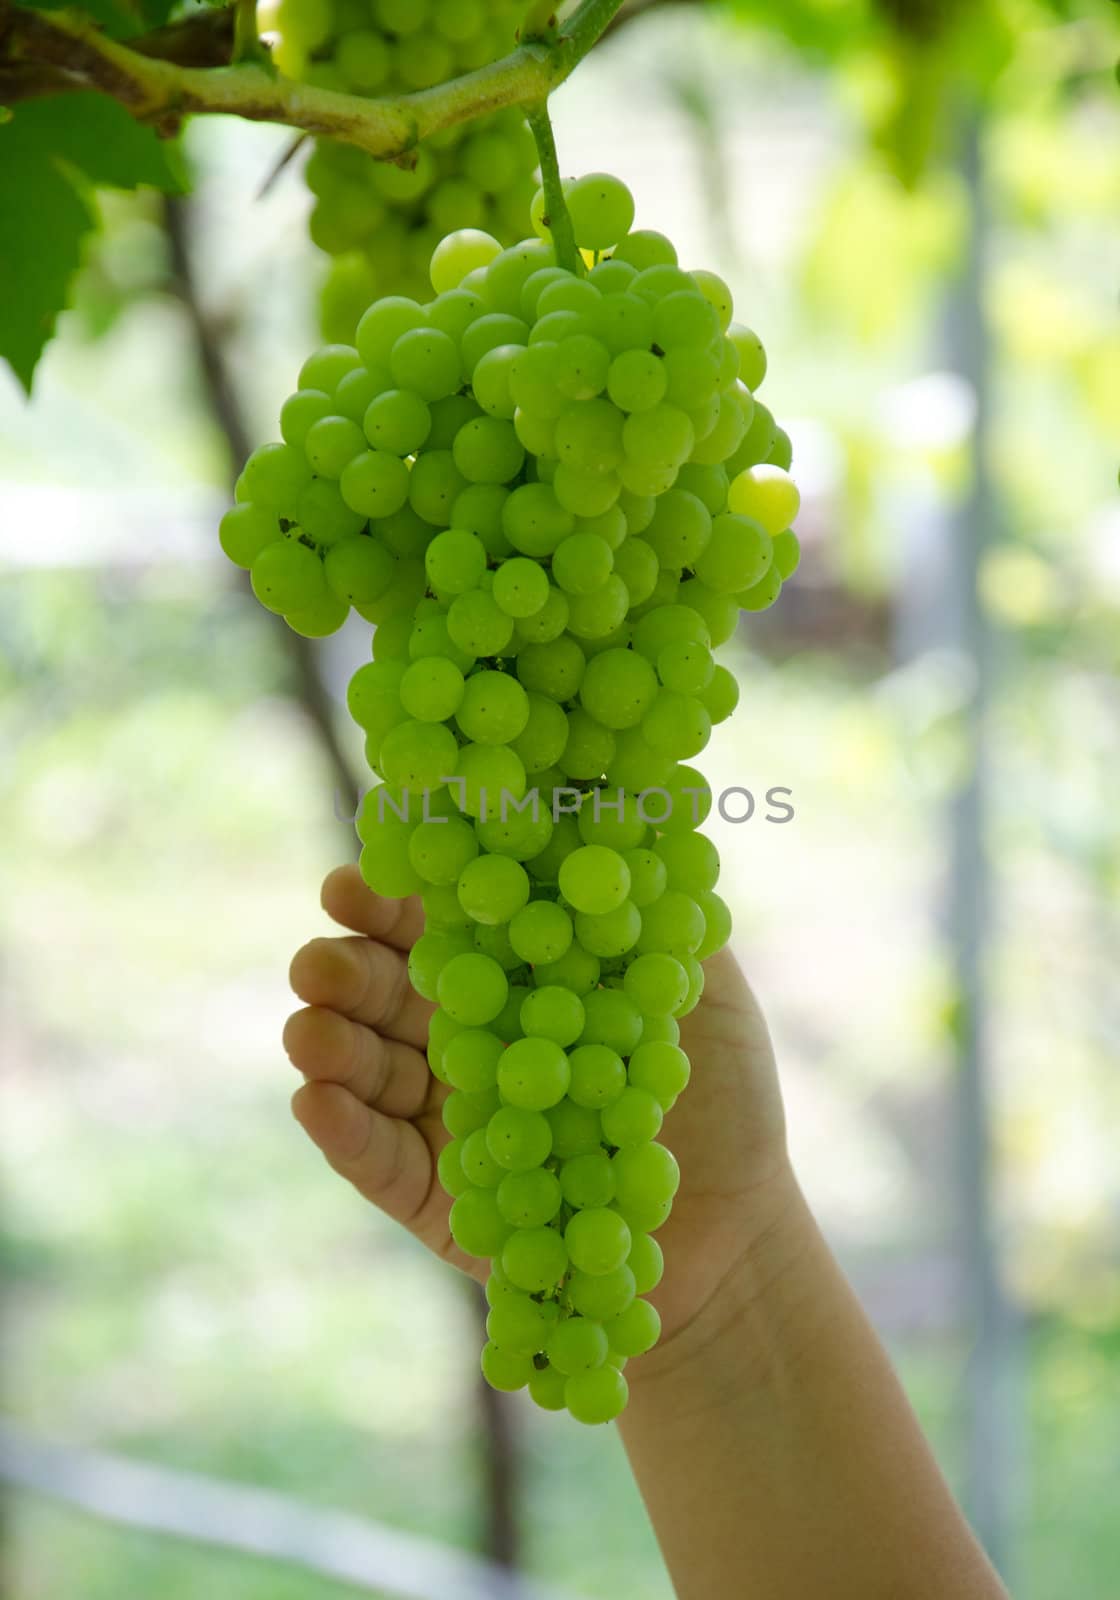 Harvesting grapes in a vineyard.